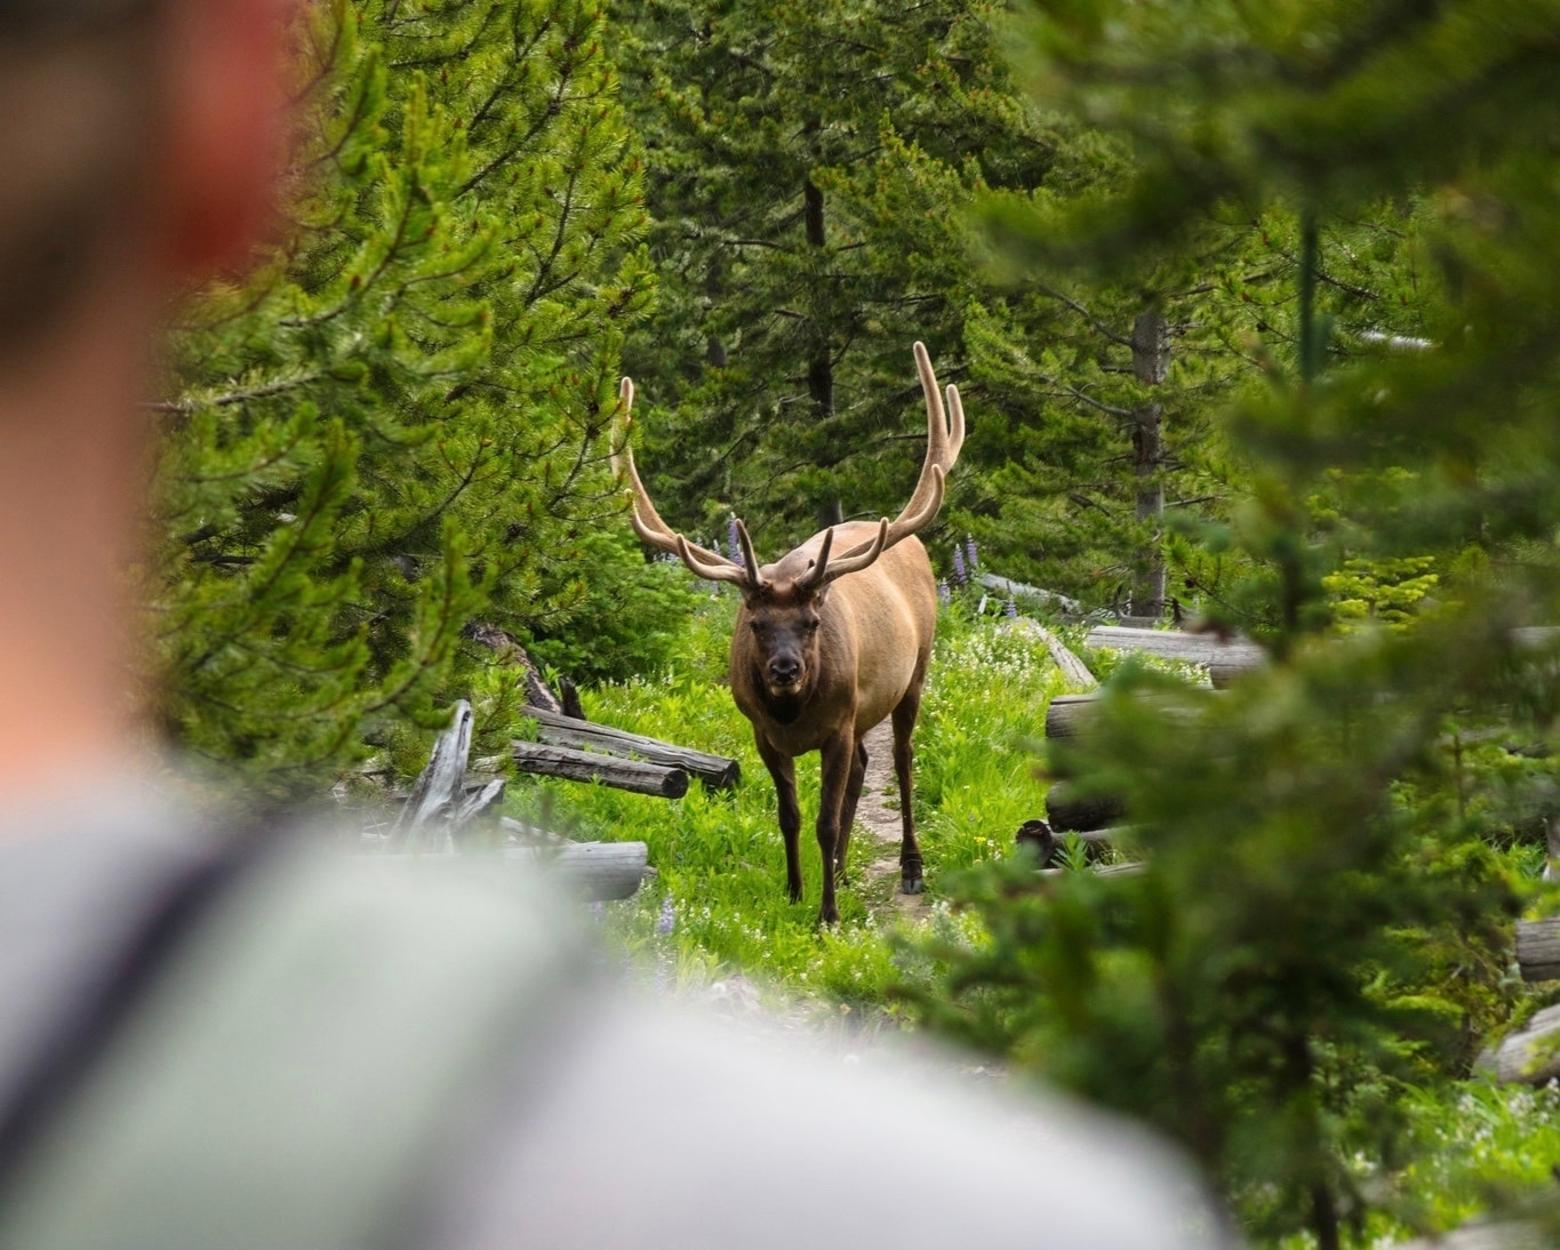 Bull elk and hiker meet on a trail. Photo courtesy Jacob W. Frank/NPS